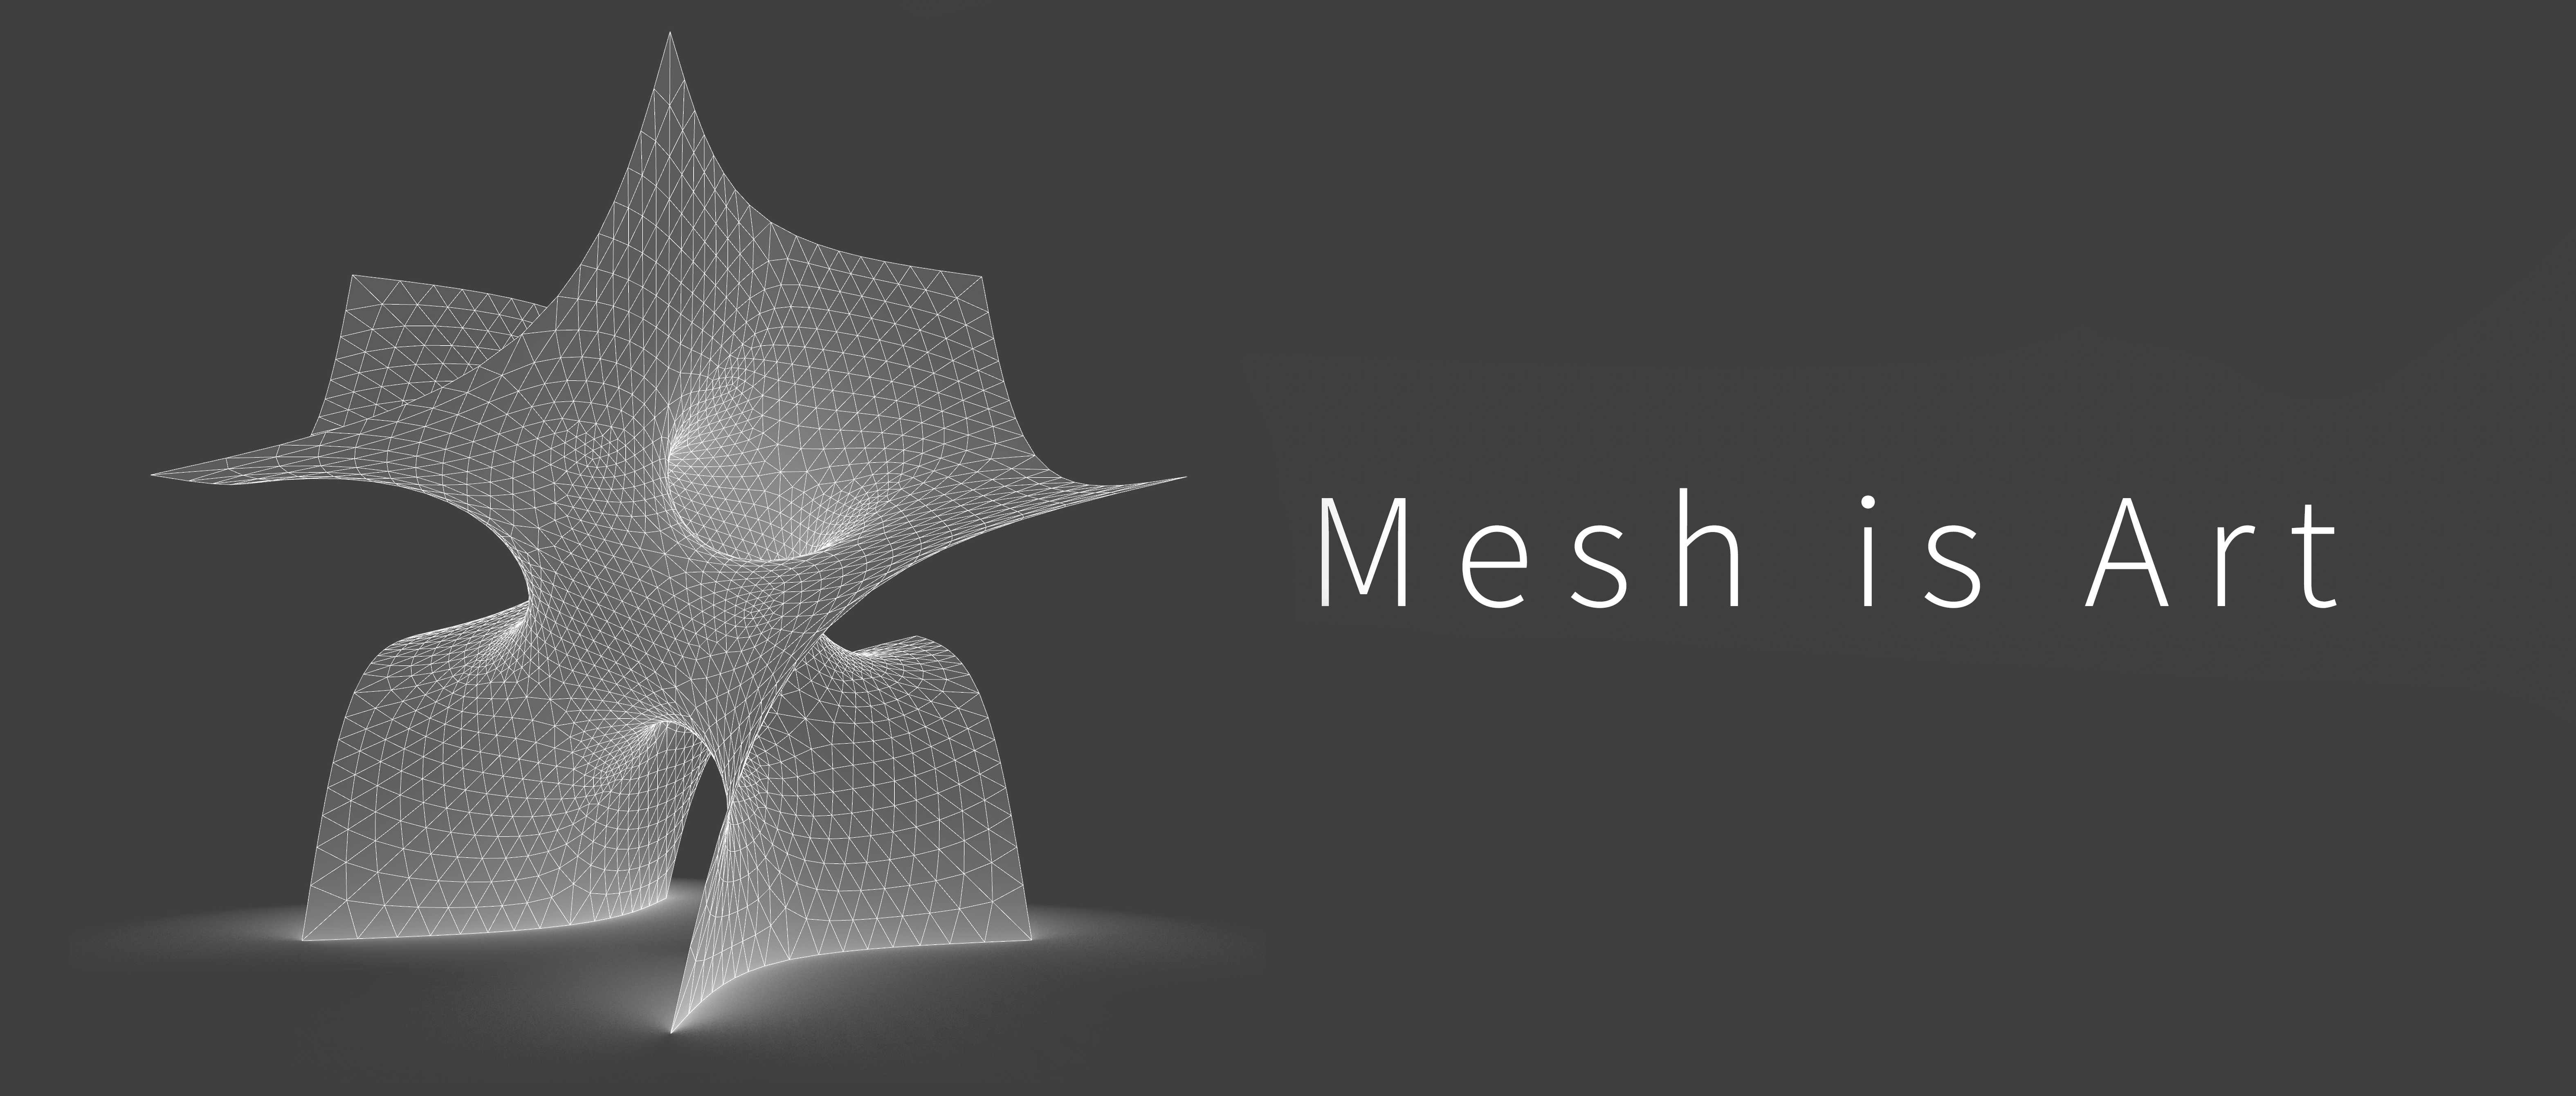 Mesh is Art (4): Subdivision